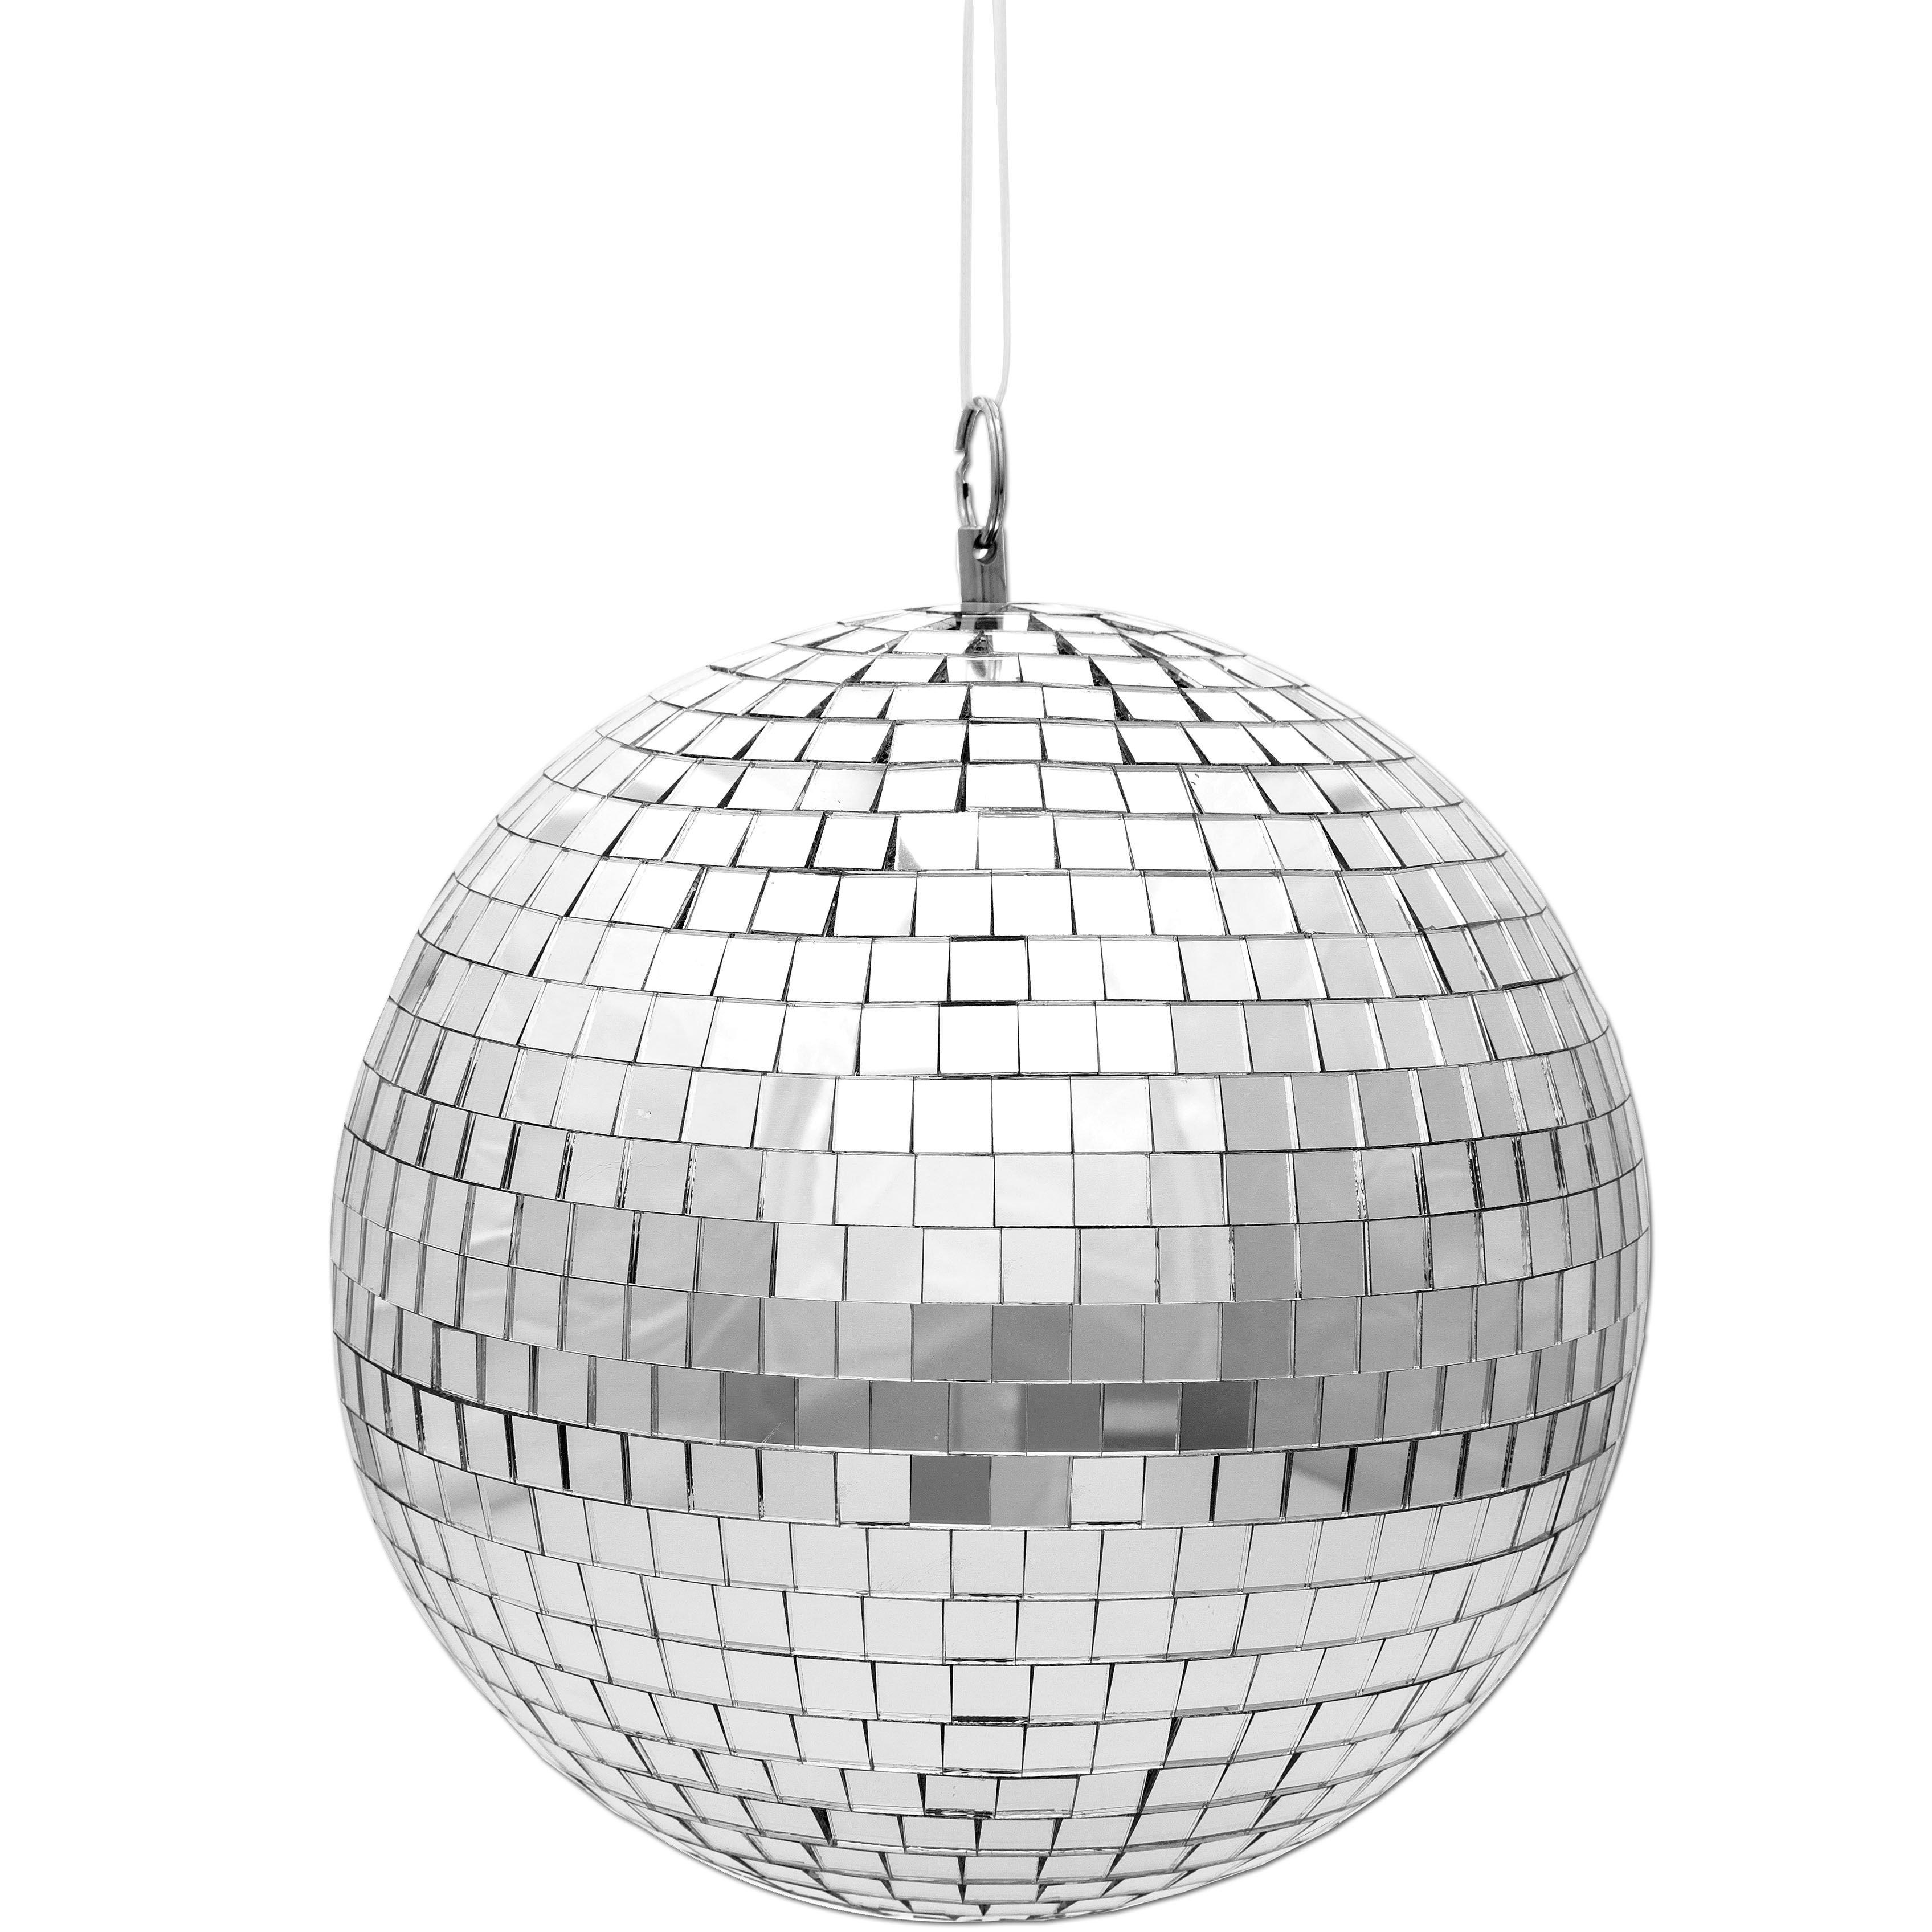 The Kylie: Mini Disco Ball